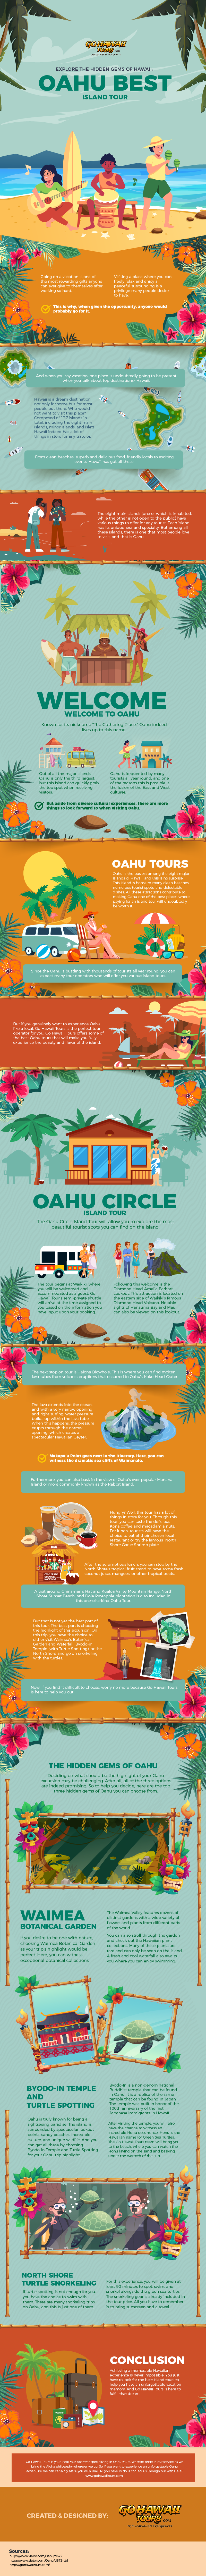 Go_Hawaii_December_Infographic_Revision_Explore_the_Hidden Gems of Hawaii_Oahu_Best_Island_Tour-01